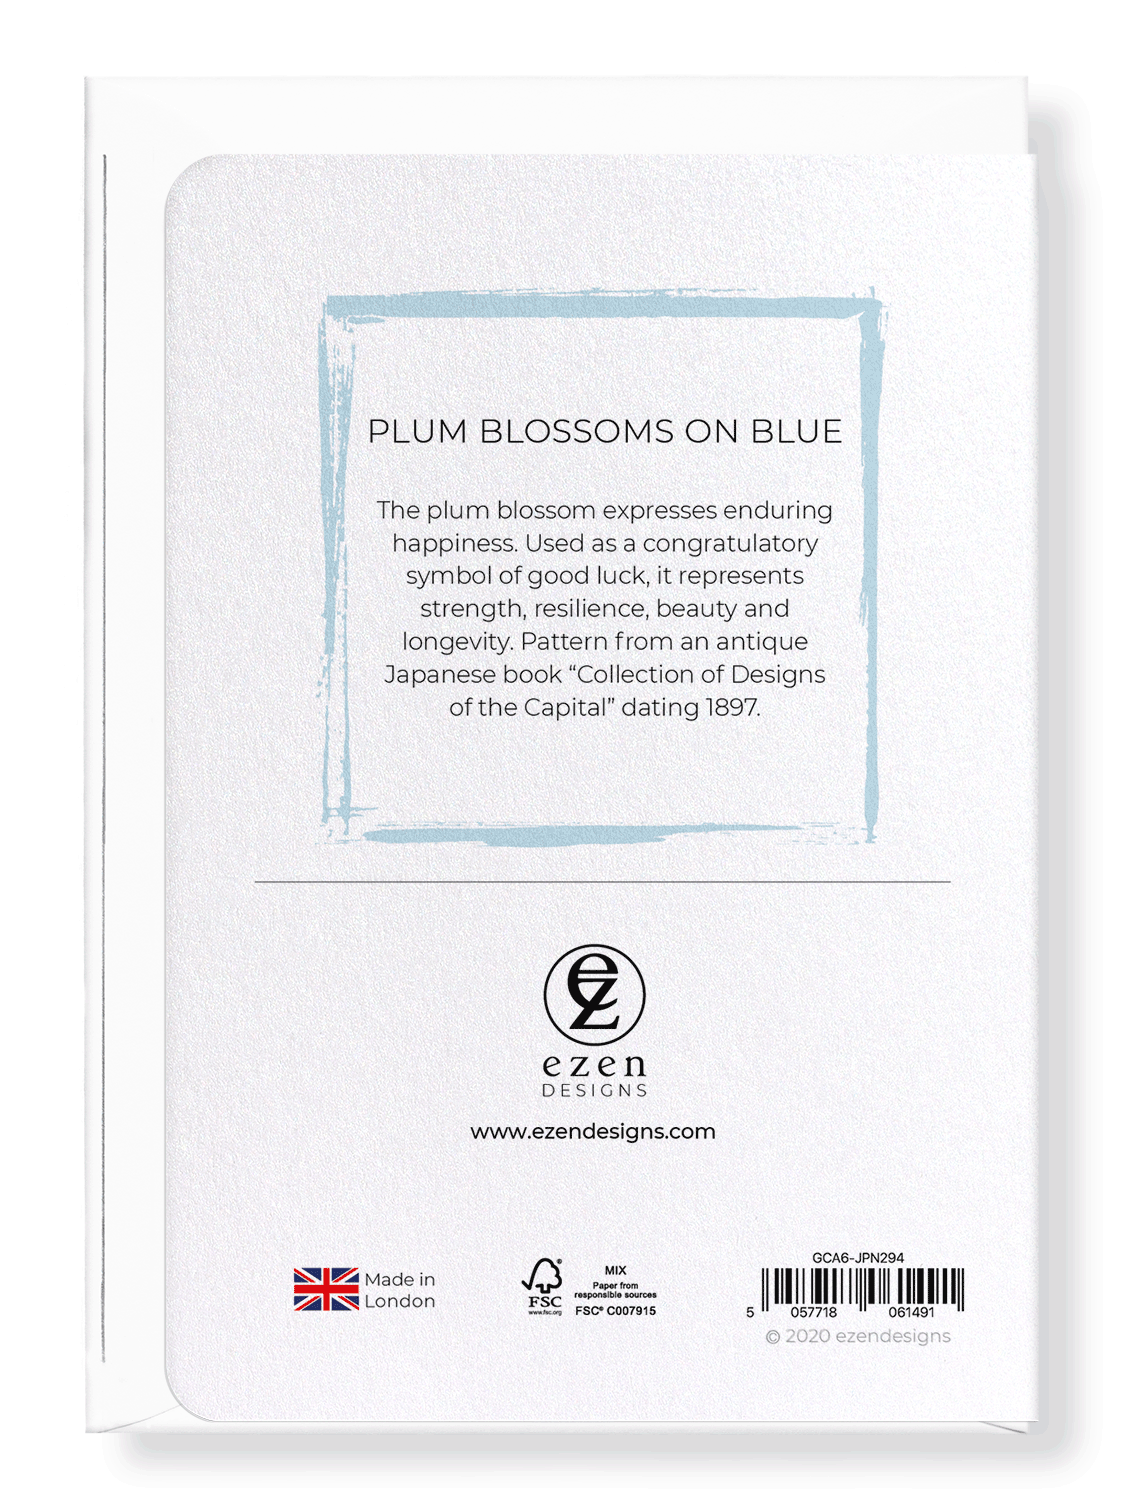 Ezen Designs - Plum blossoms on blue - Greeting Card - Back